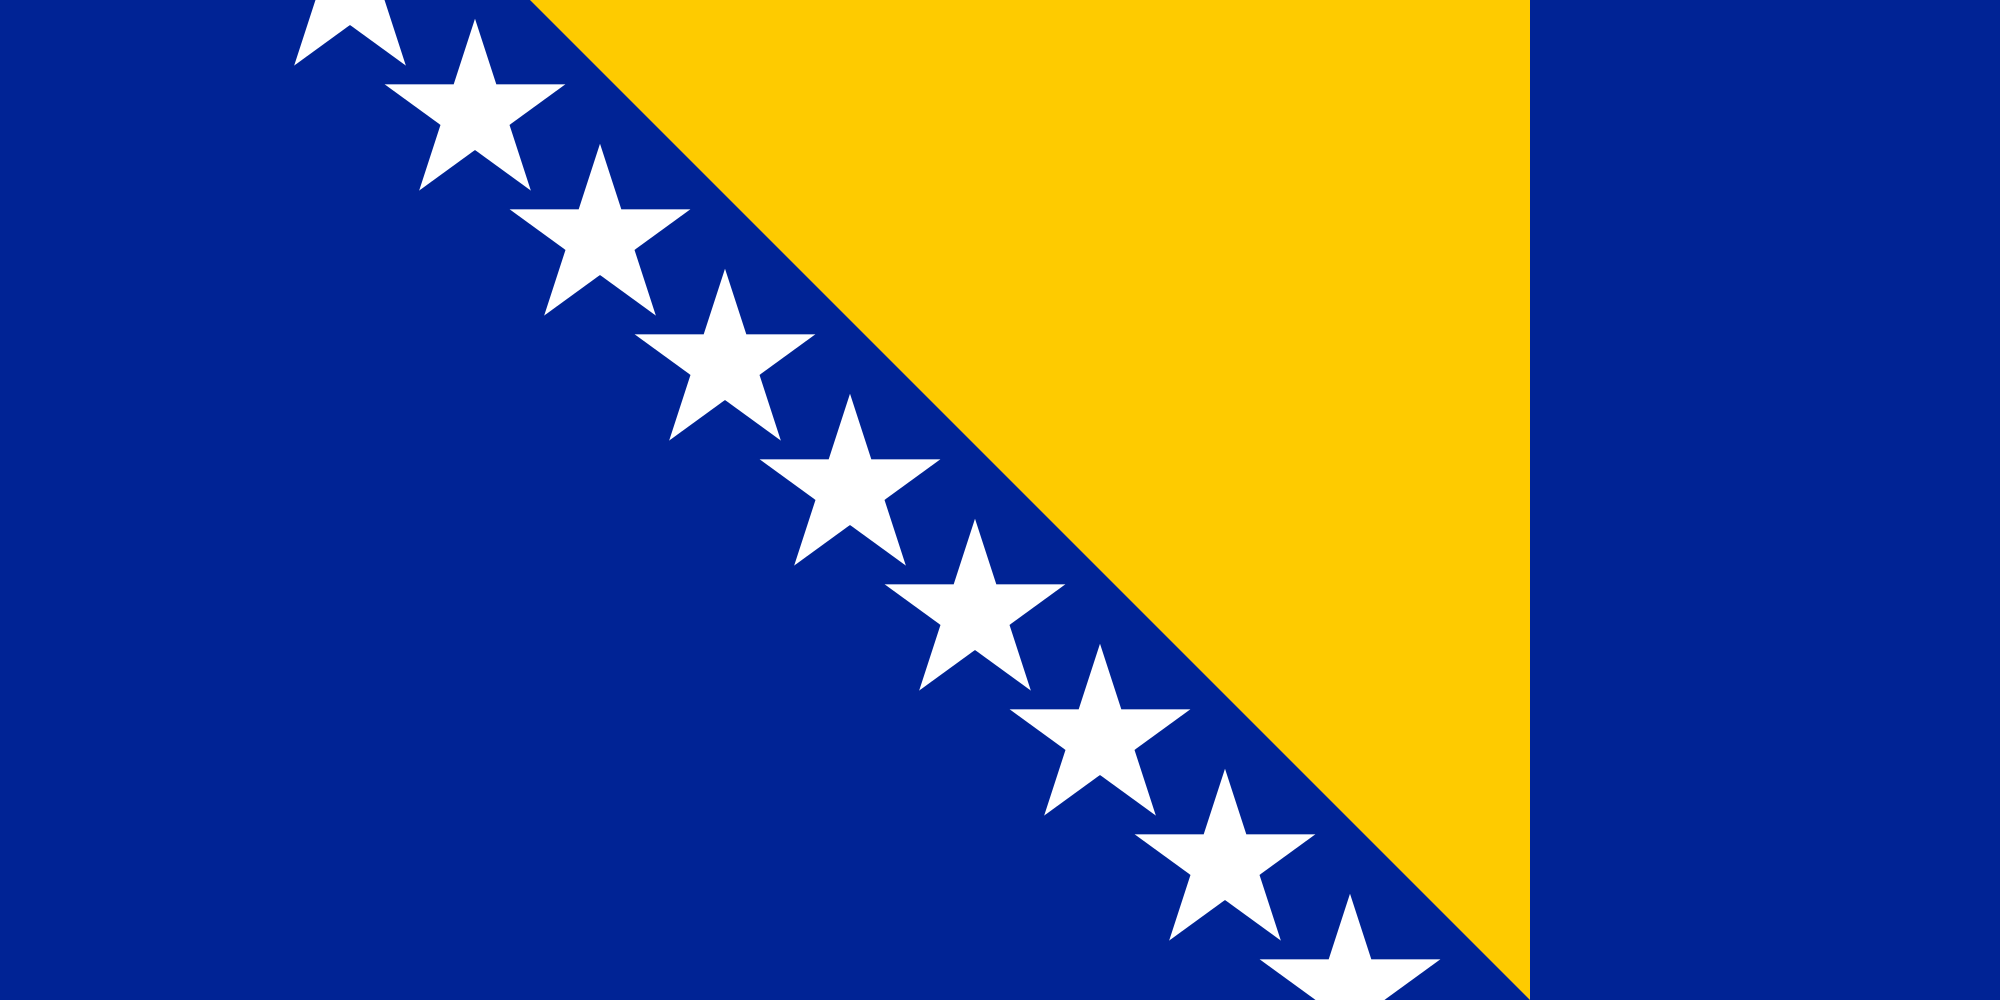 https://upload.wikimedia.org/wikipedia/commons/thumb/b/bf/Flag_of_Bosnia_and_Herzegovina.svg/2000px-Flag_of_Bosnia_and_Herzegovina.svg.png